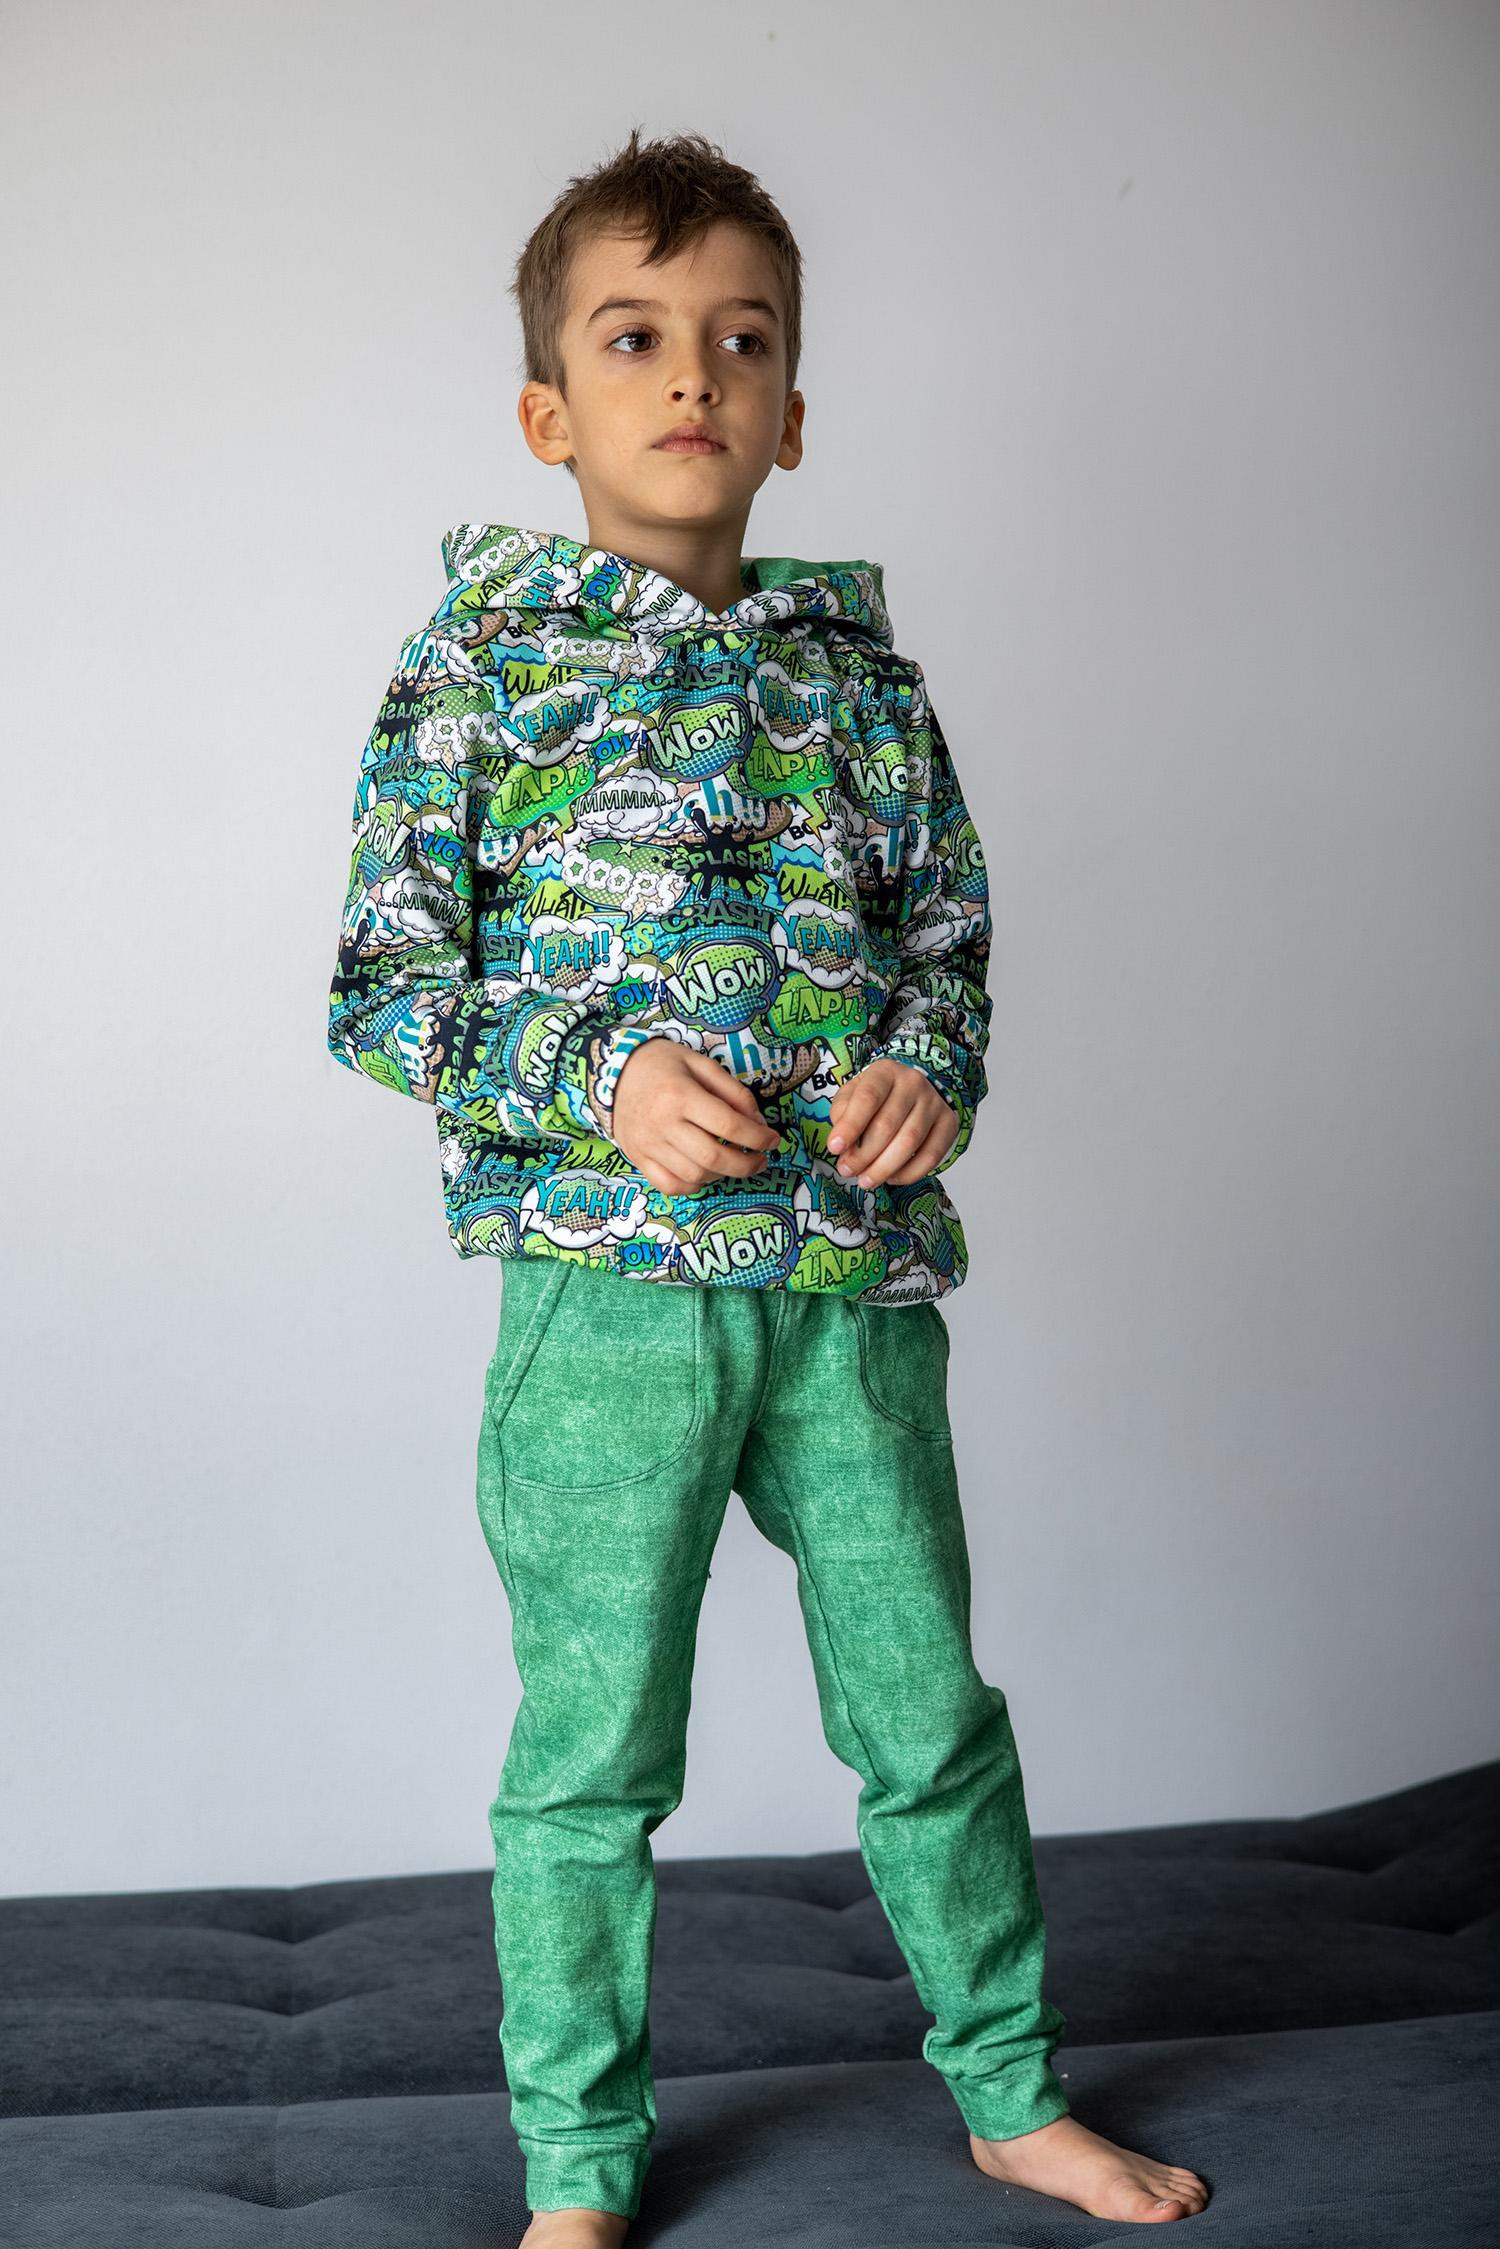 Children's tracksuit (OSLO) - DINO SIGHT / M-01 melange light grey - looped knit fabric 